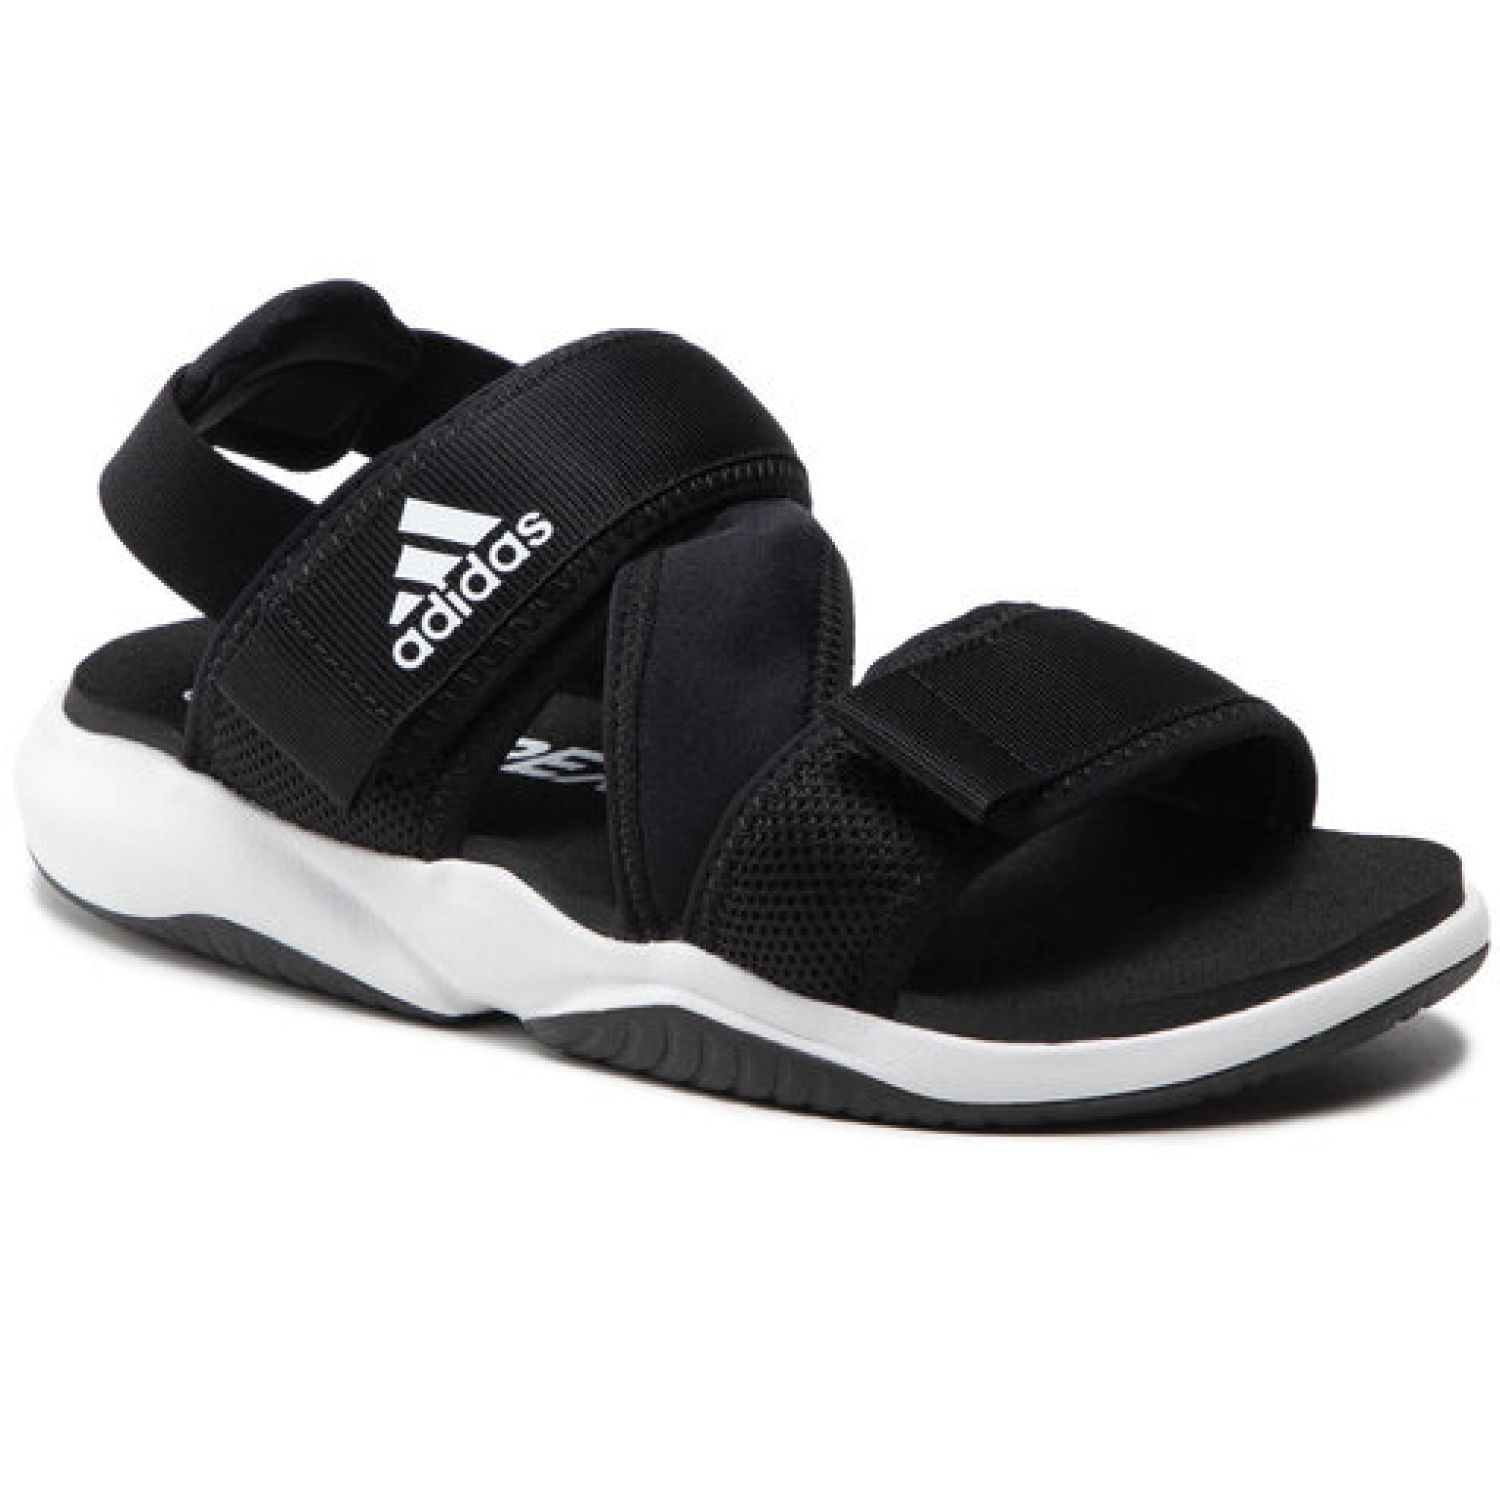 3023 - Adidas Terrex Sumra Sandals Blk | Item Details - Easy Sole